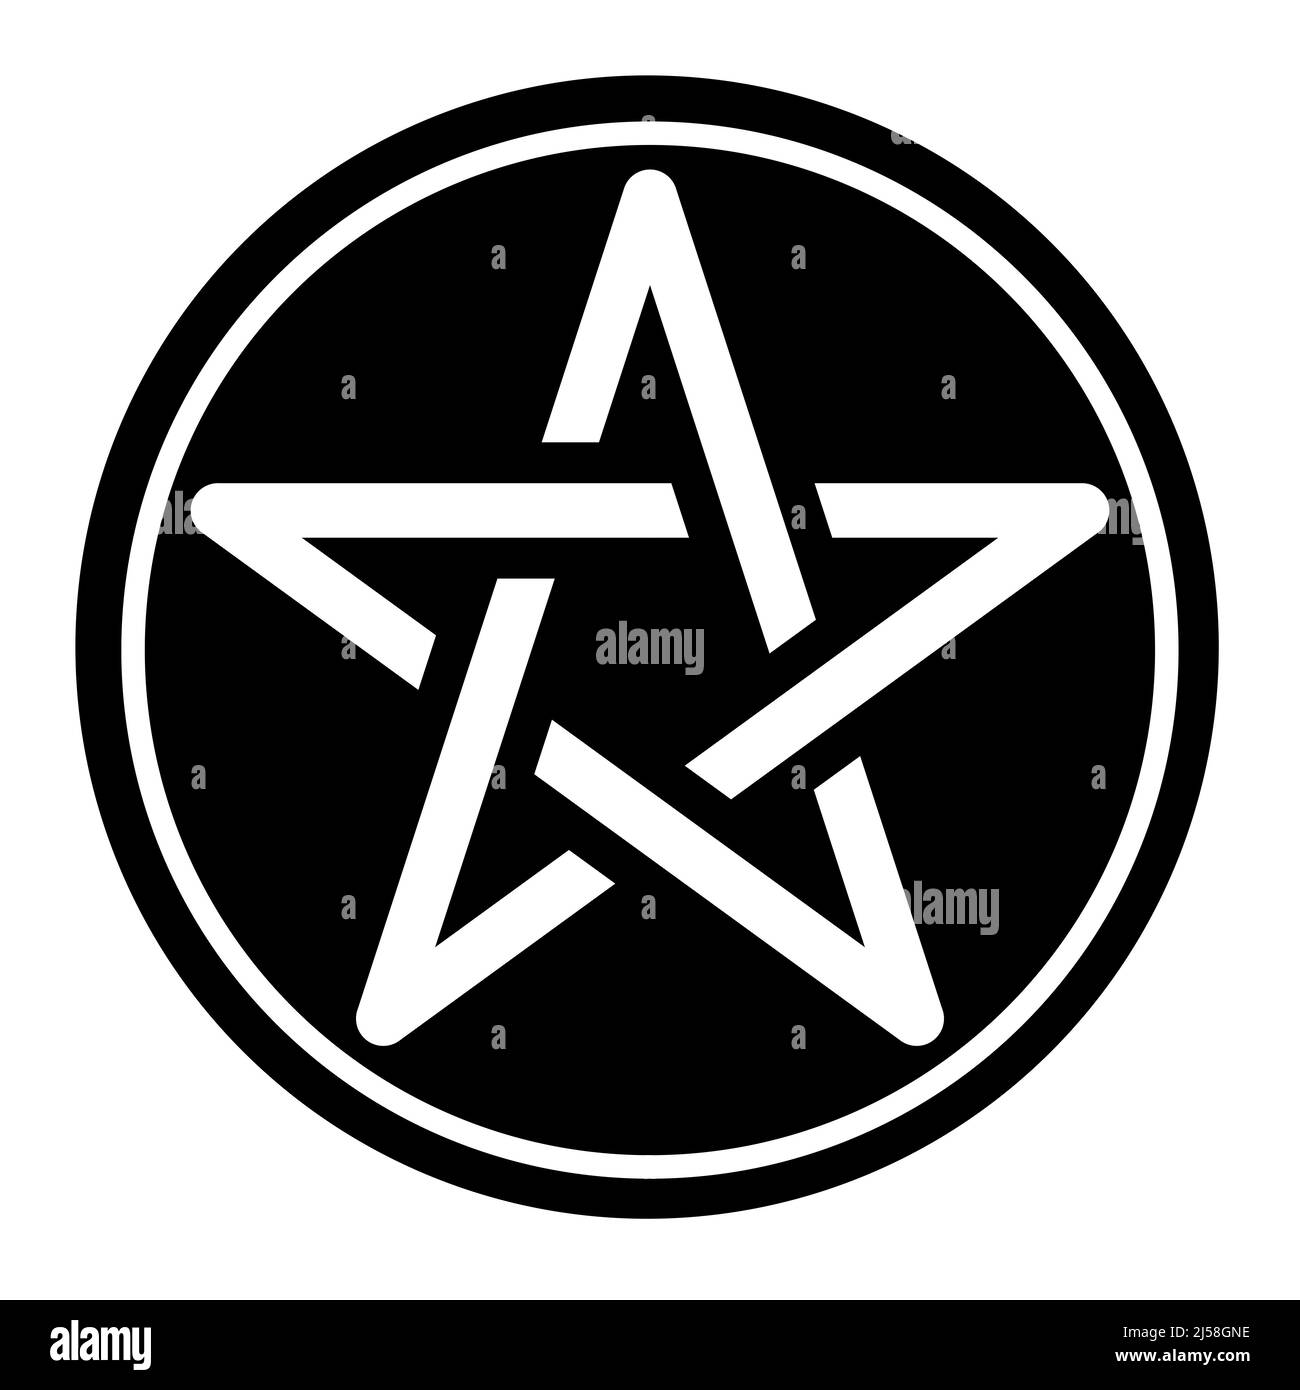 Interlaced pentagram symbol icon in a black circle Stock Photo